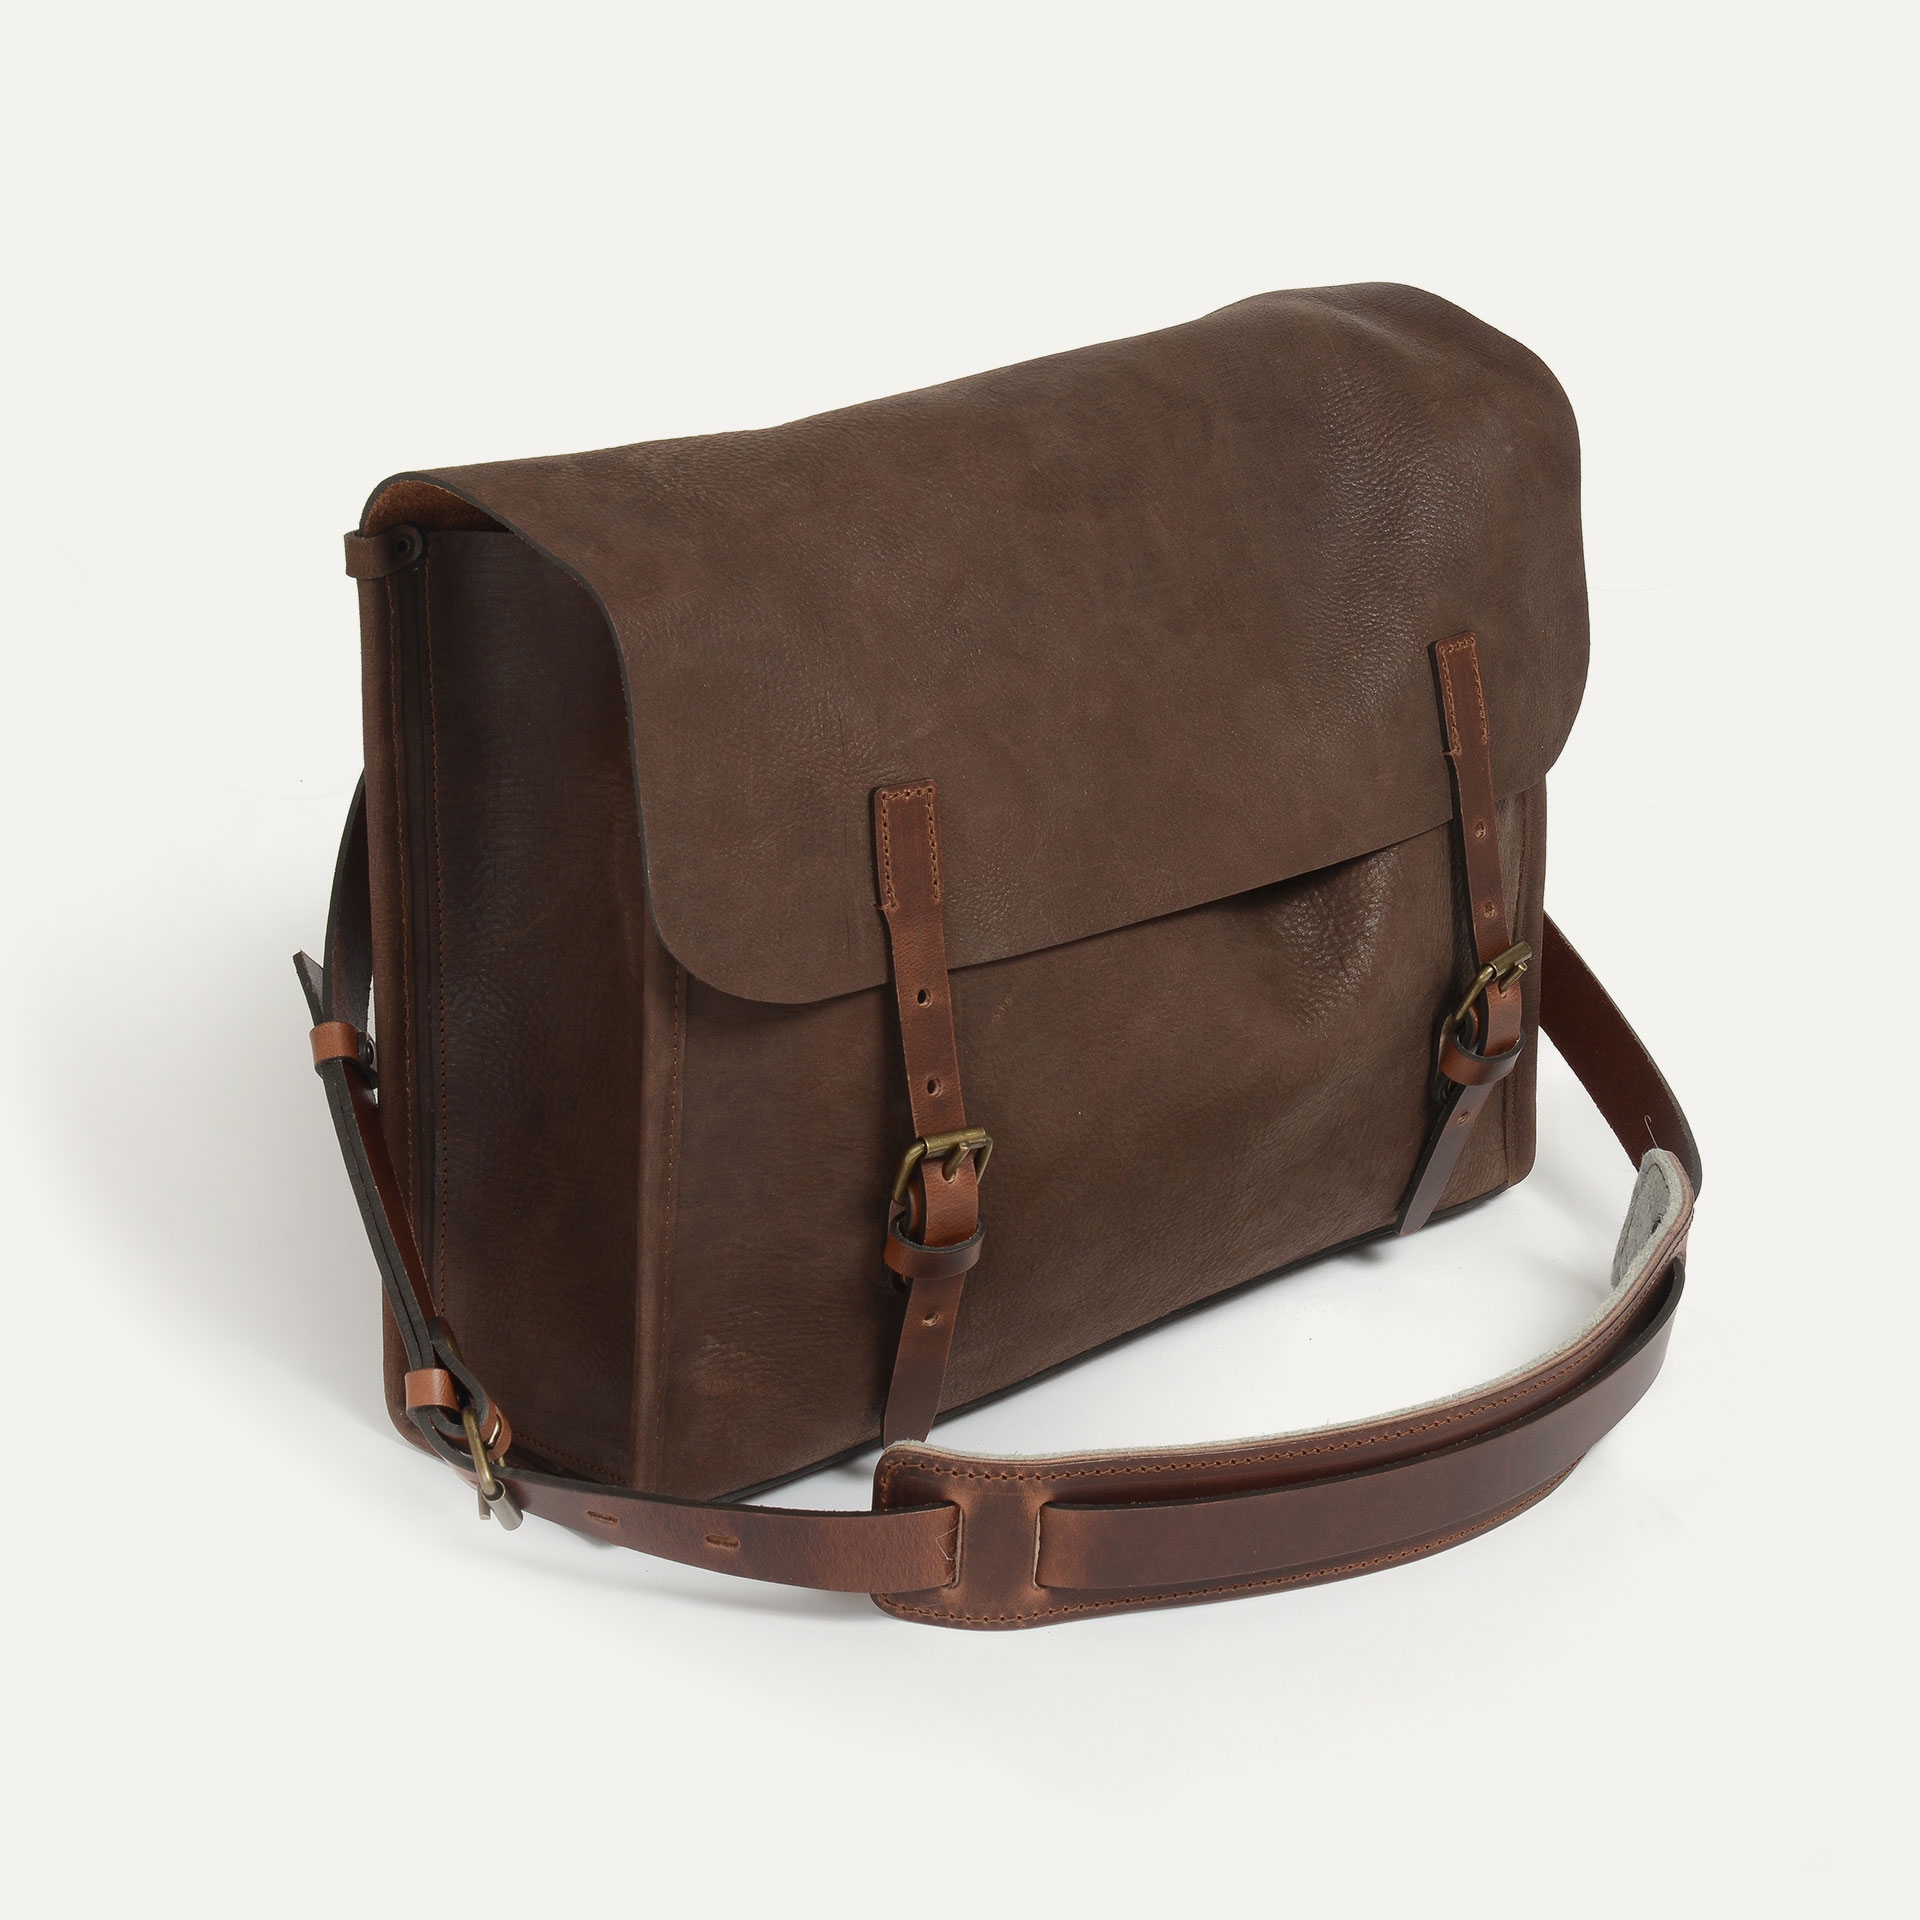 'Telegram' Postman bag - Coffee / Waxed Leather - Leather satchel bag ...